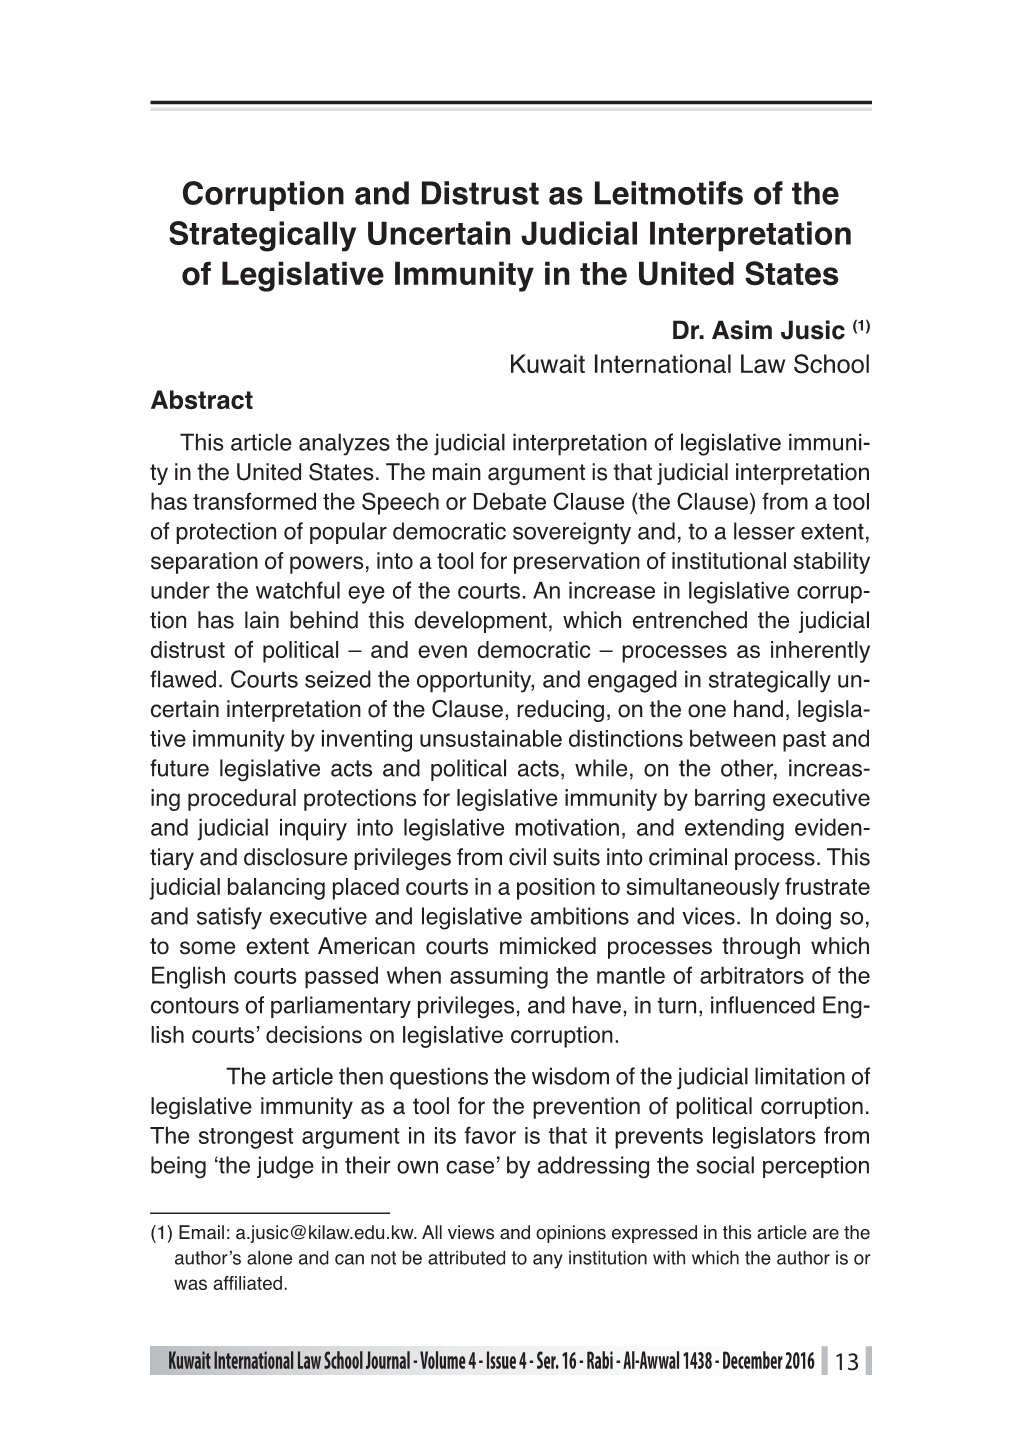 Corruption and Distrust As Leitmotifs of the Strategically Uncertain Judicial Interpretation of Legislative Immunity in the United States